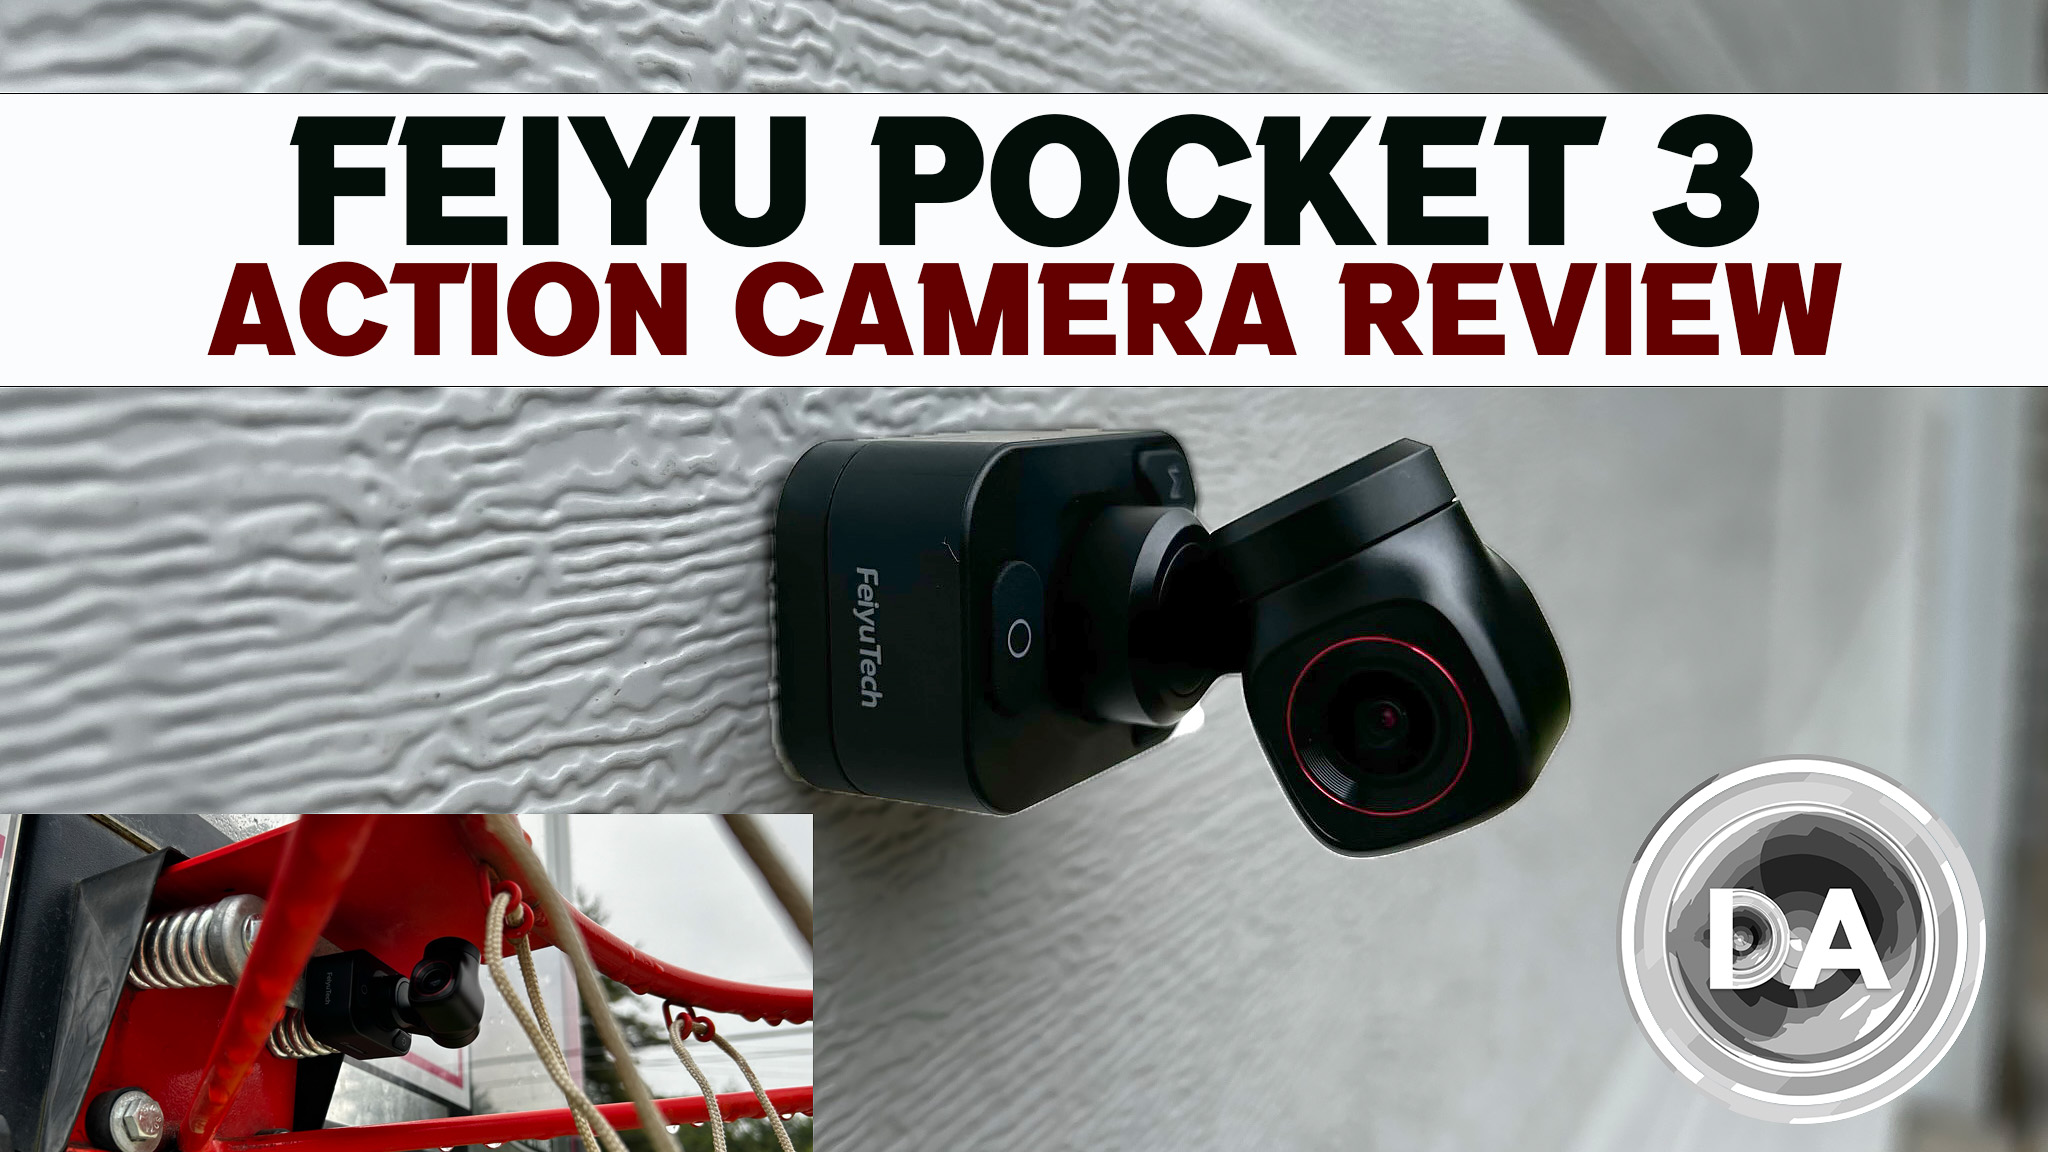 Feiyu Pocket 3 Action Camera Review - DustinAbbott.net